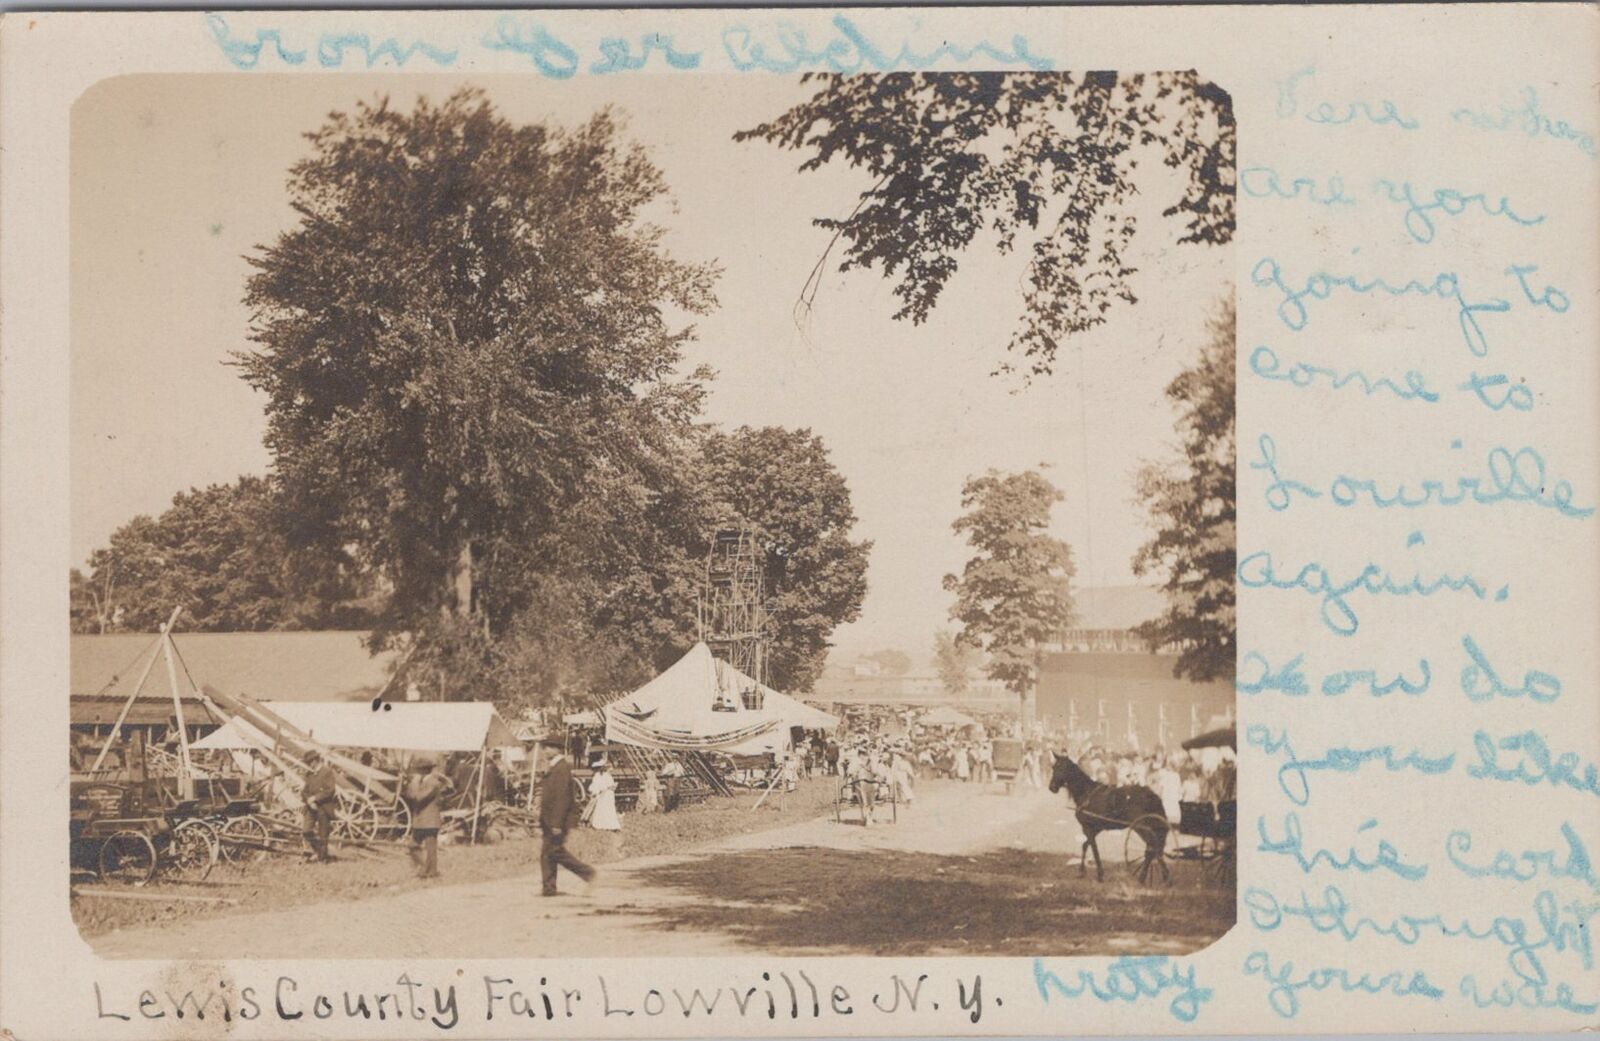 Crowd at Lewis County Fair Lowville Ferris Wheel New York 1907 RPPC Postcard